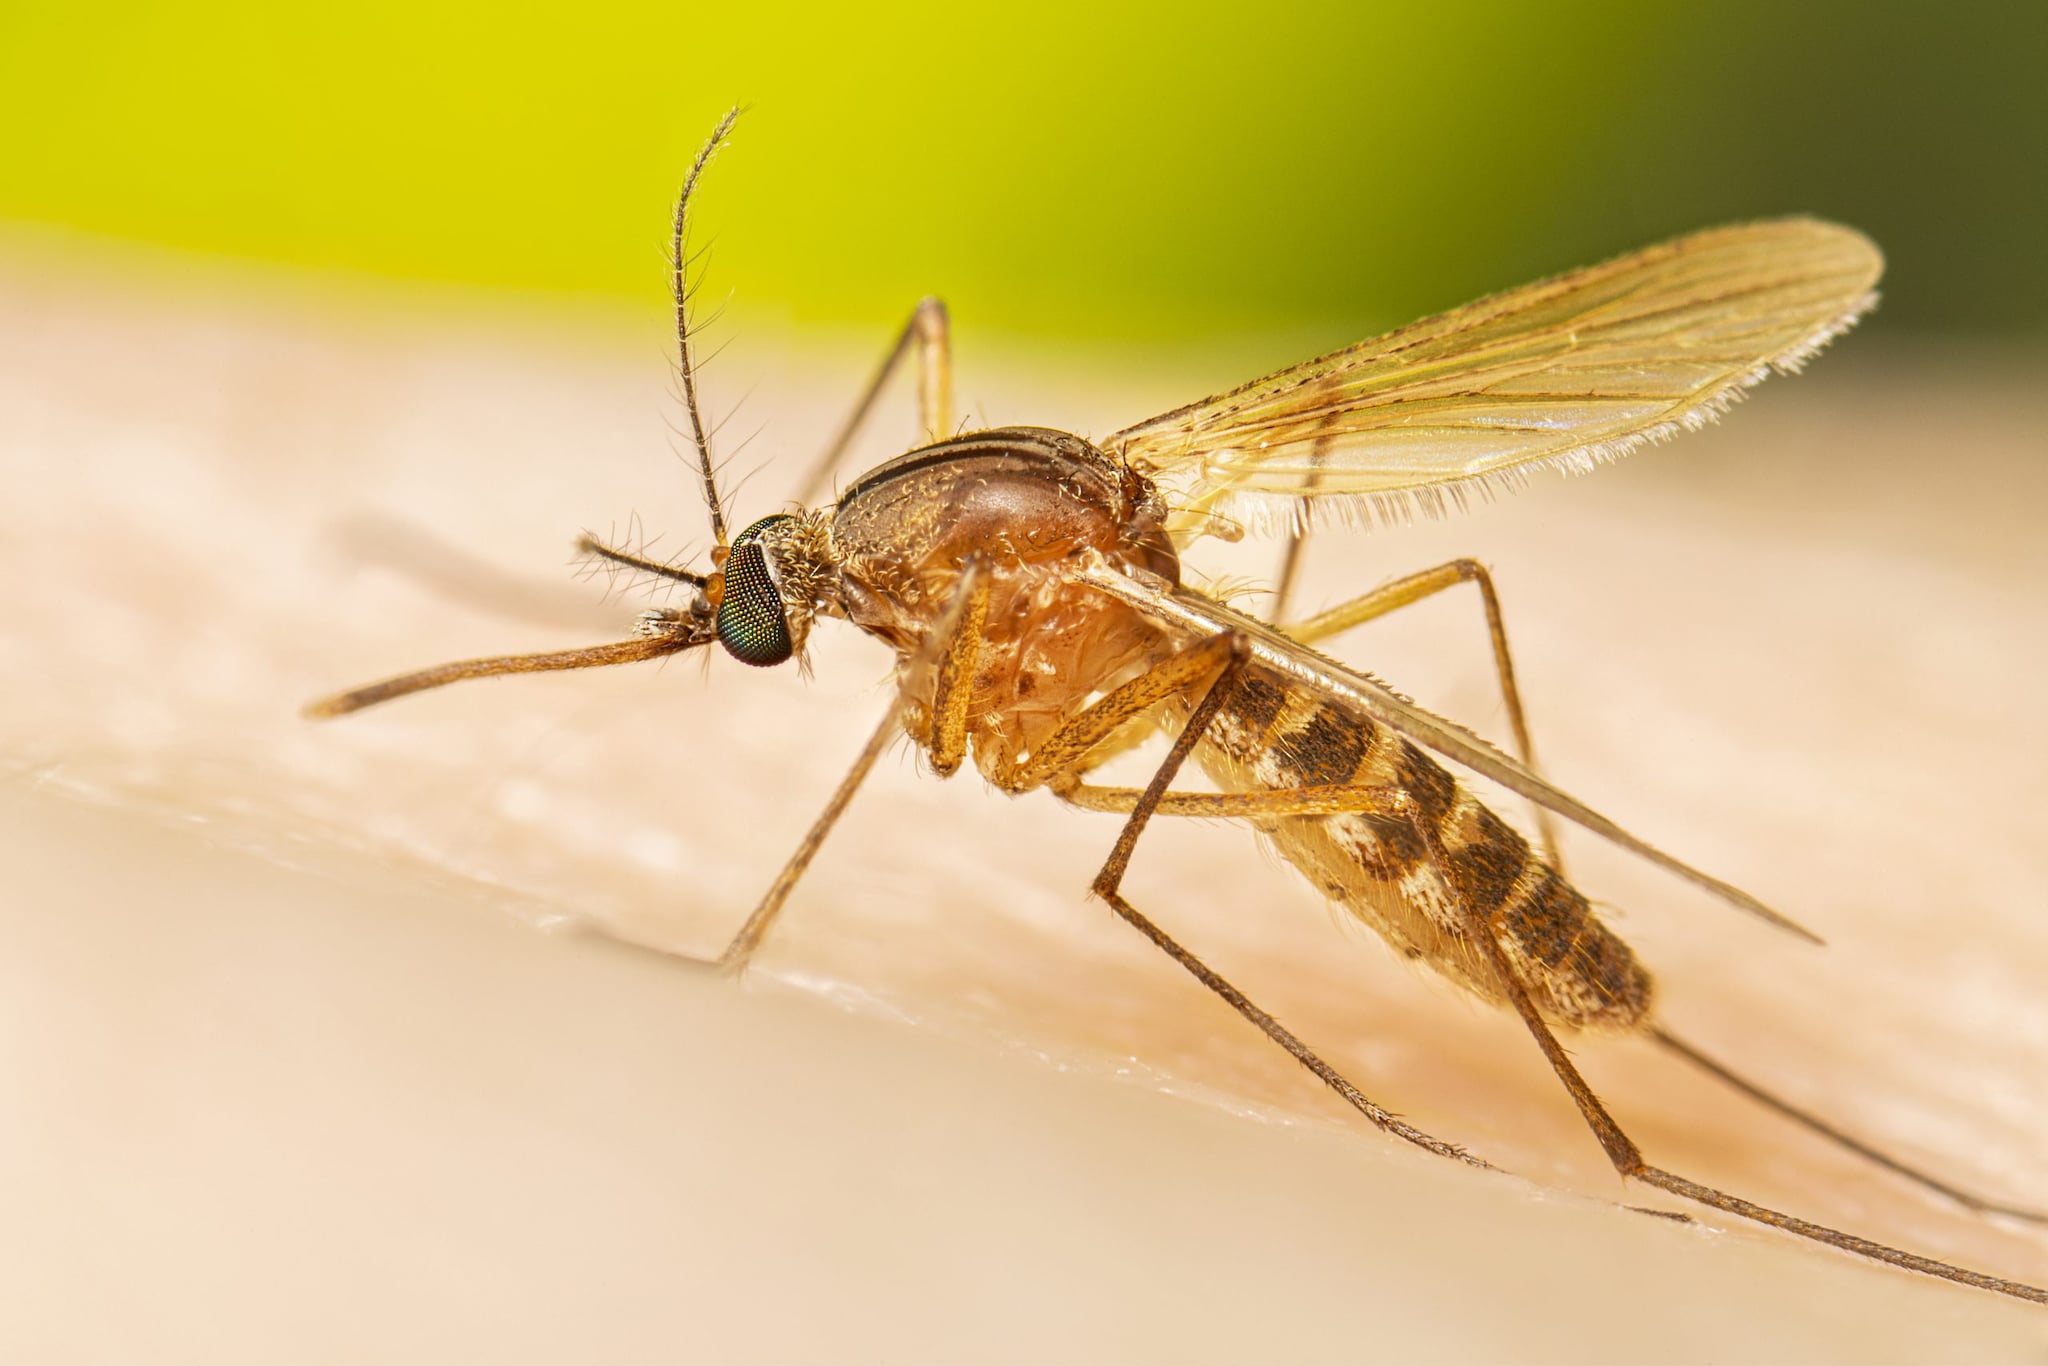 Adult female Culex quinquefasciatus mosquito before a blood meal